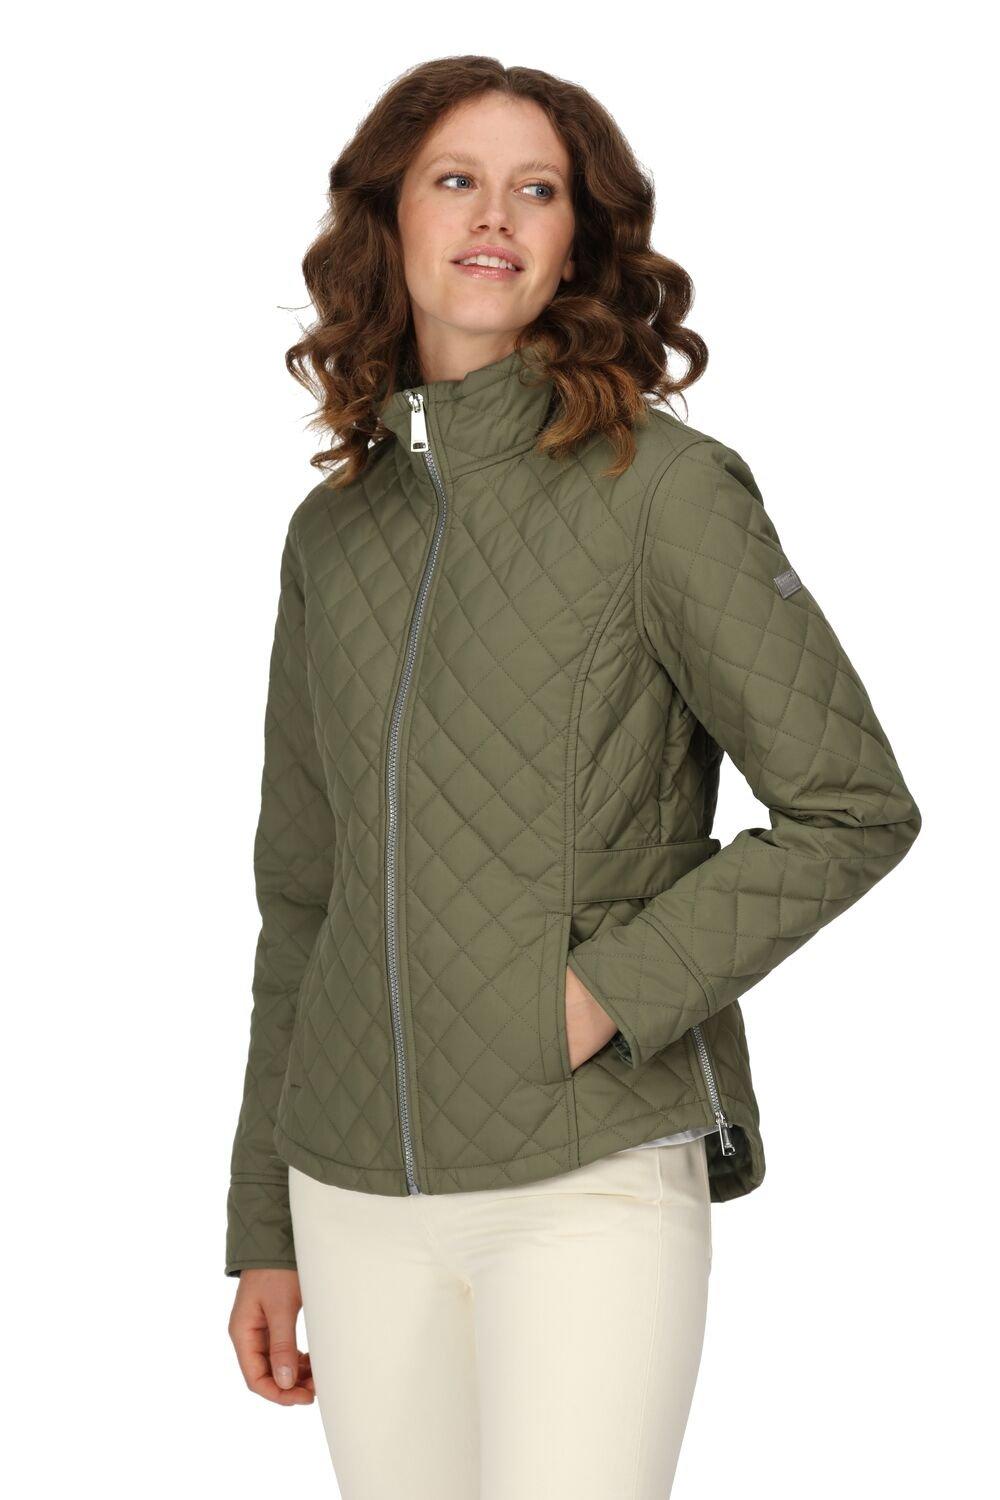 fletcher giovanna the eve illusion Водоотталкивающая прогулочная куртка Thermoguard 'Carmine' Regatta, зеленый